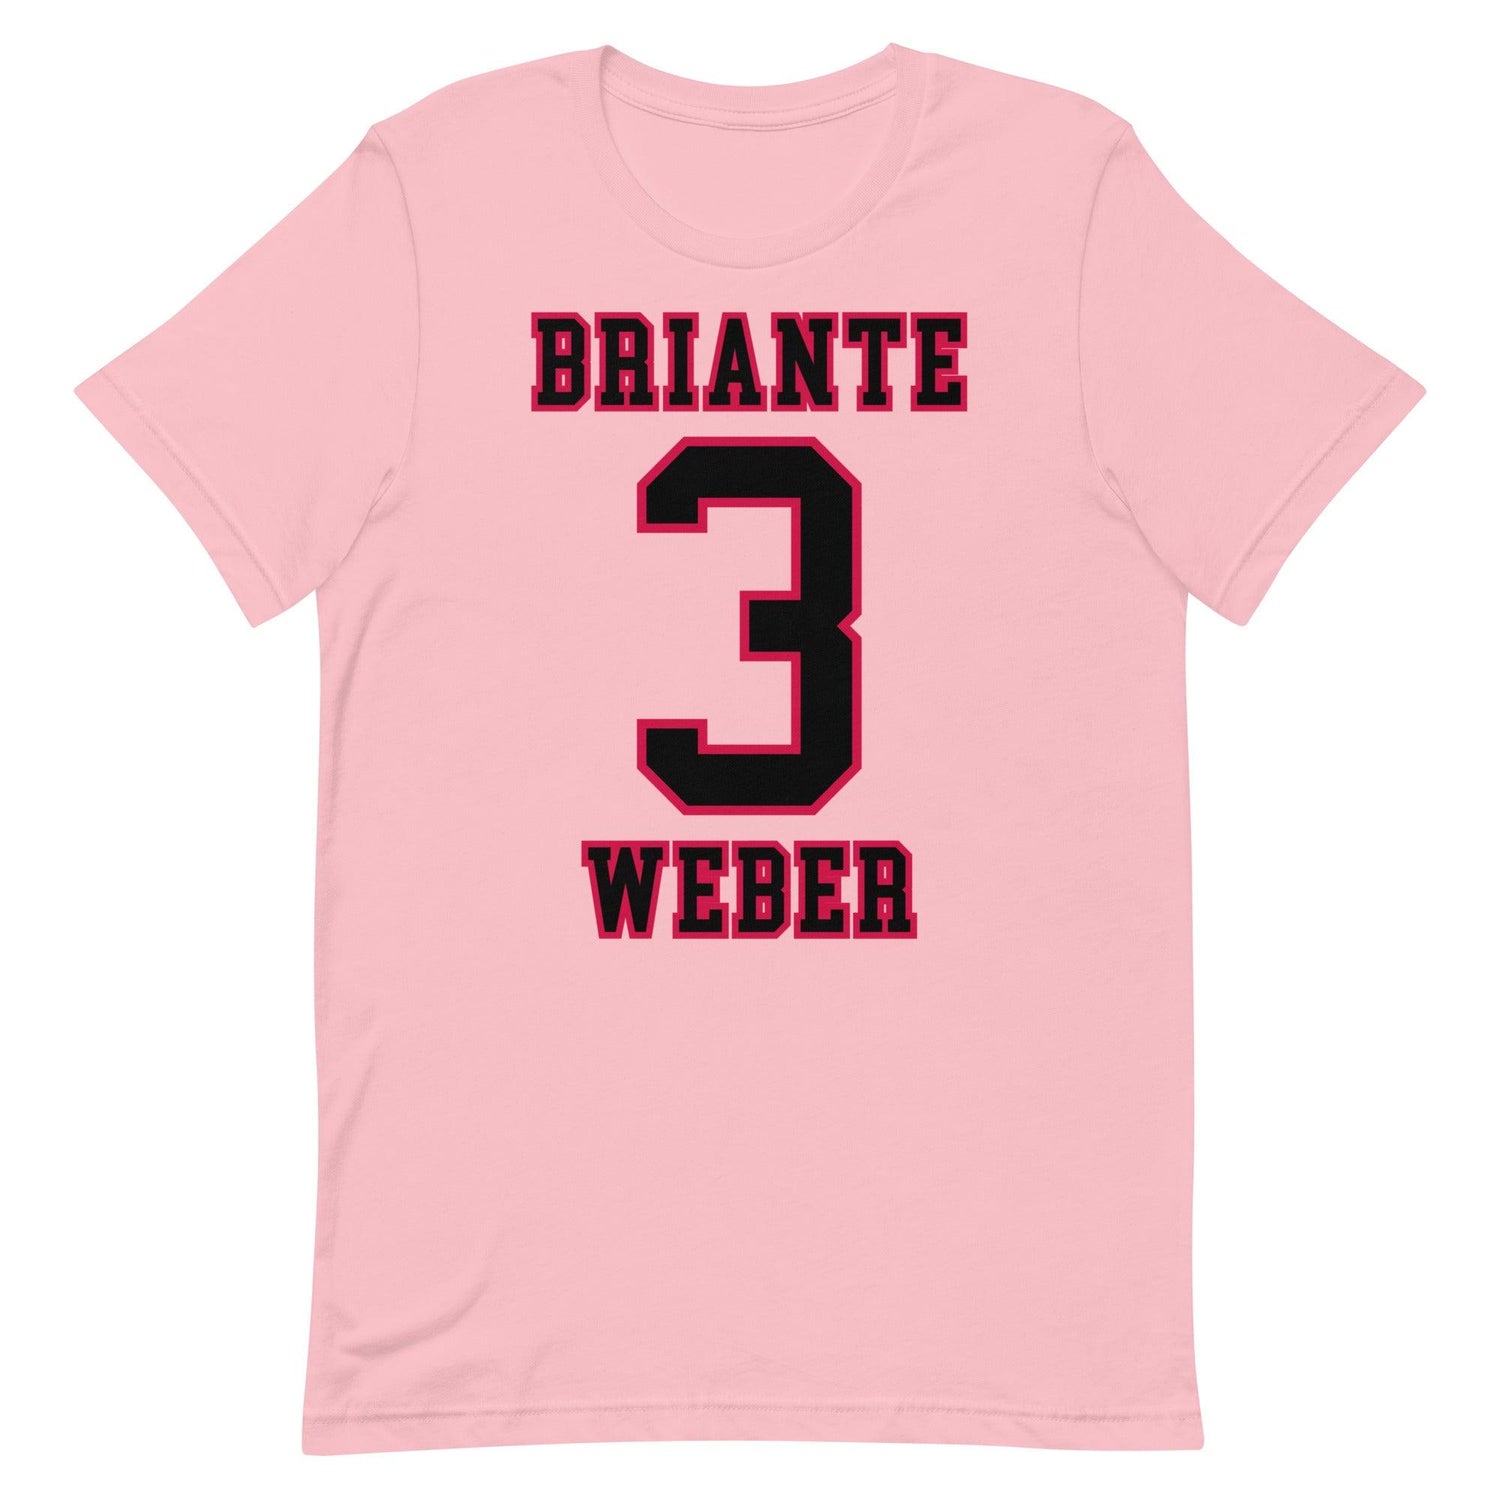 Briante Weber "Jersey" t-shirt - Fan Arch